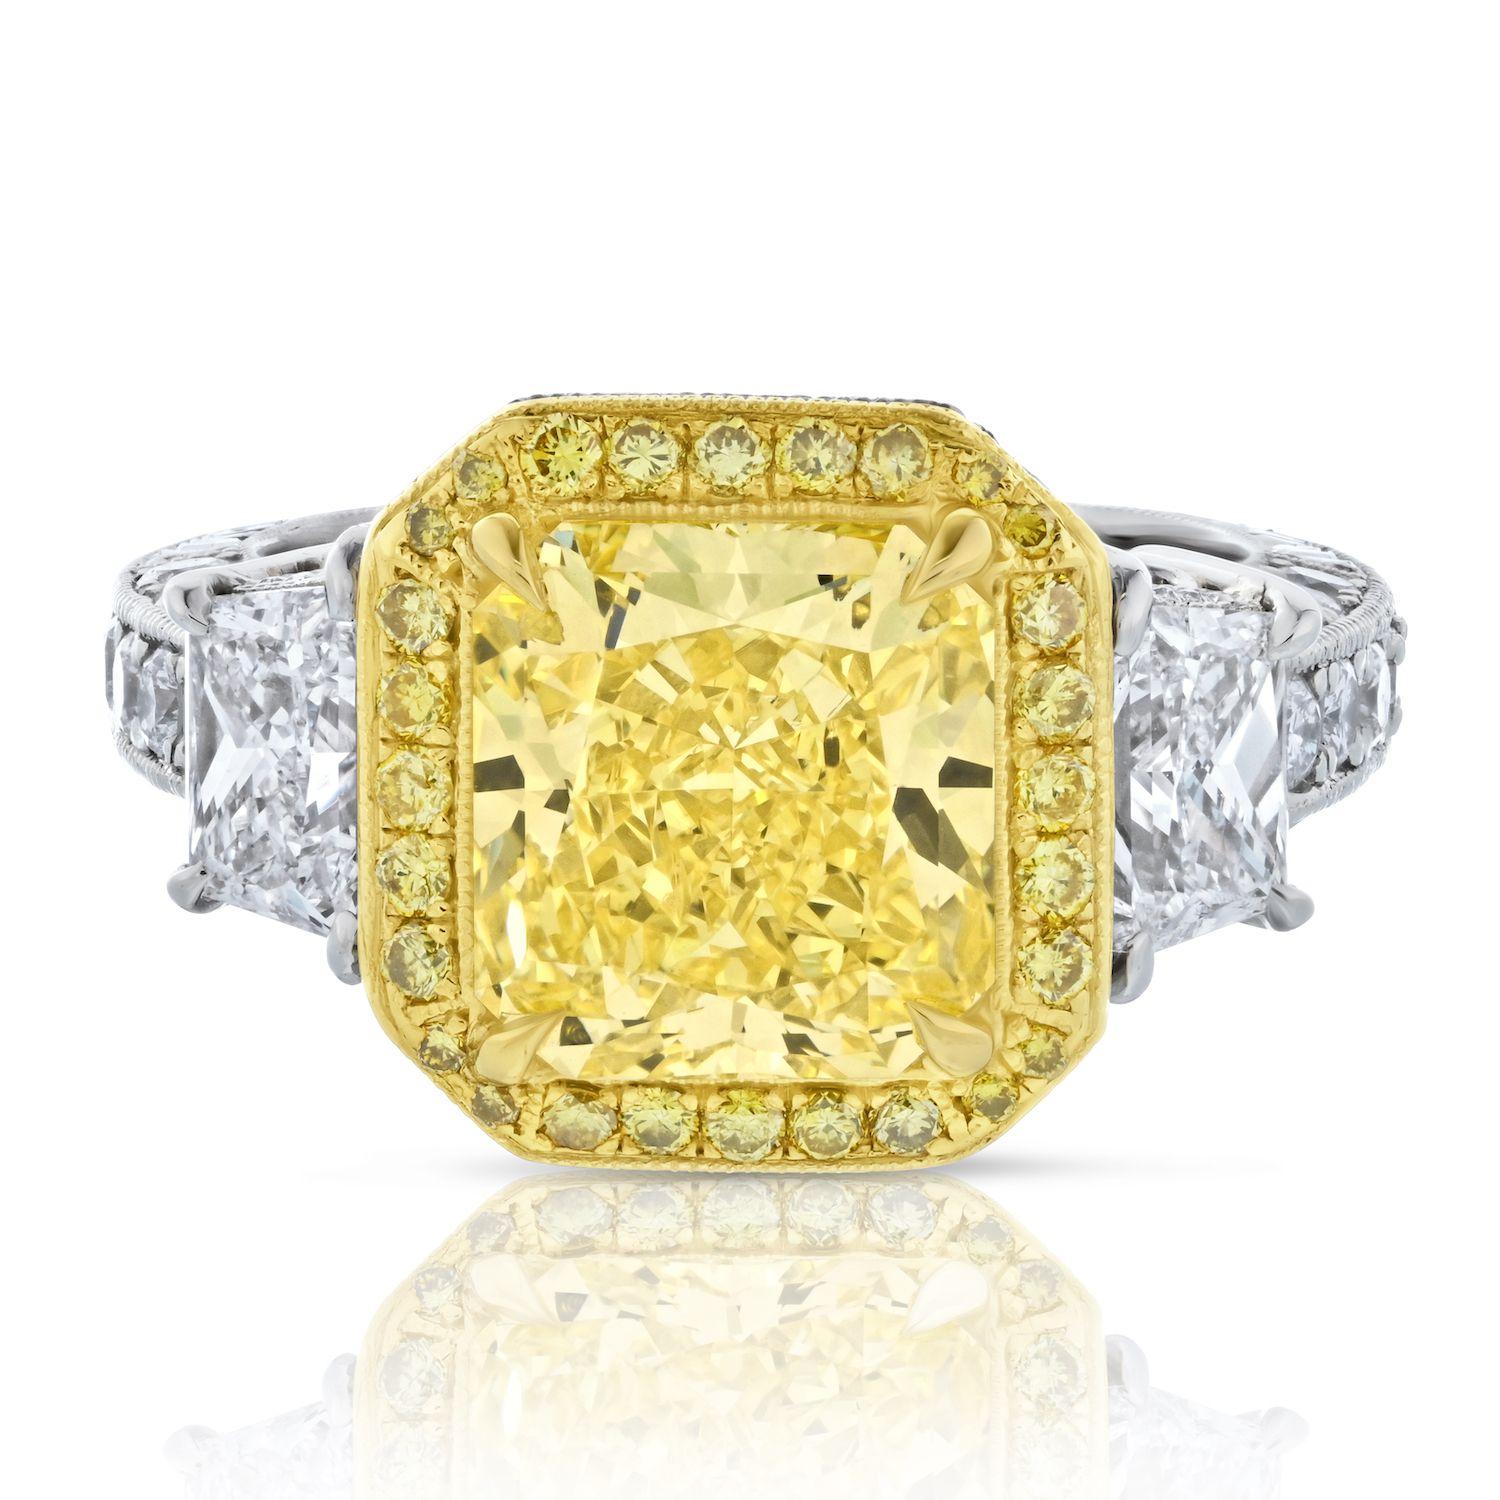 3 carat yellow diamond ring